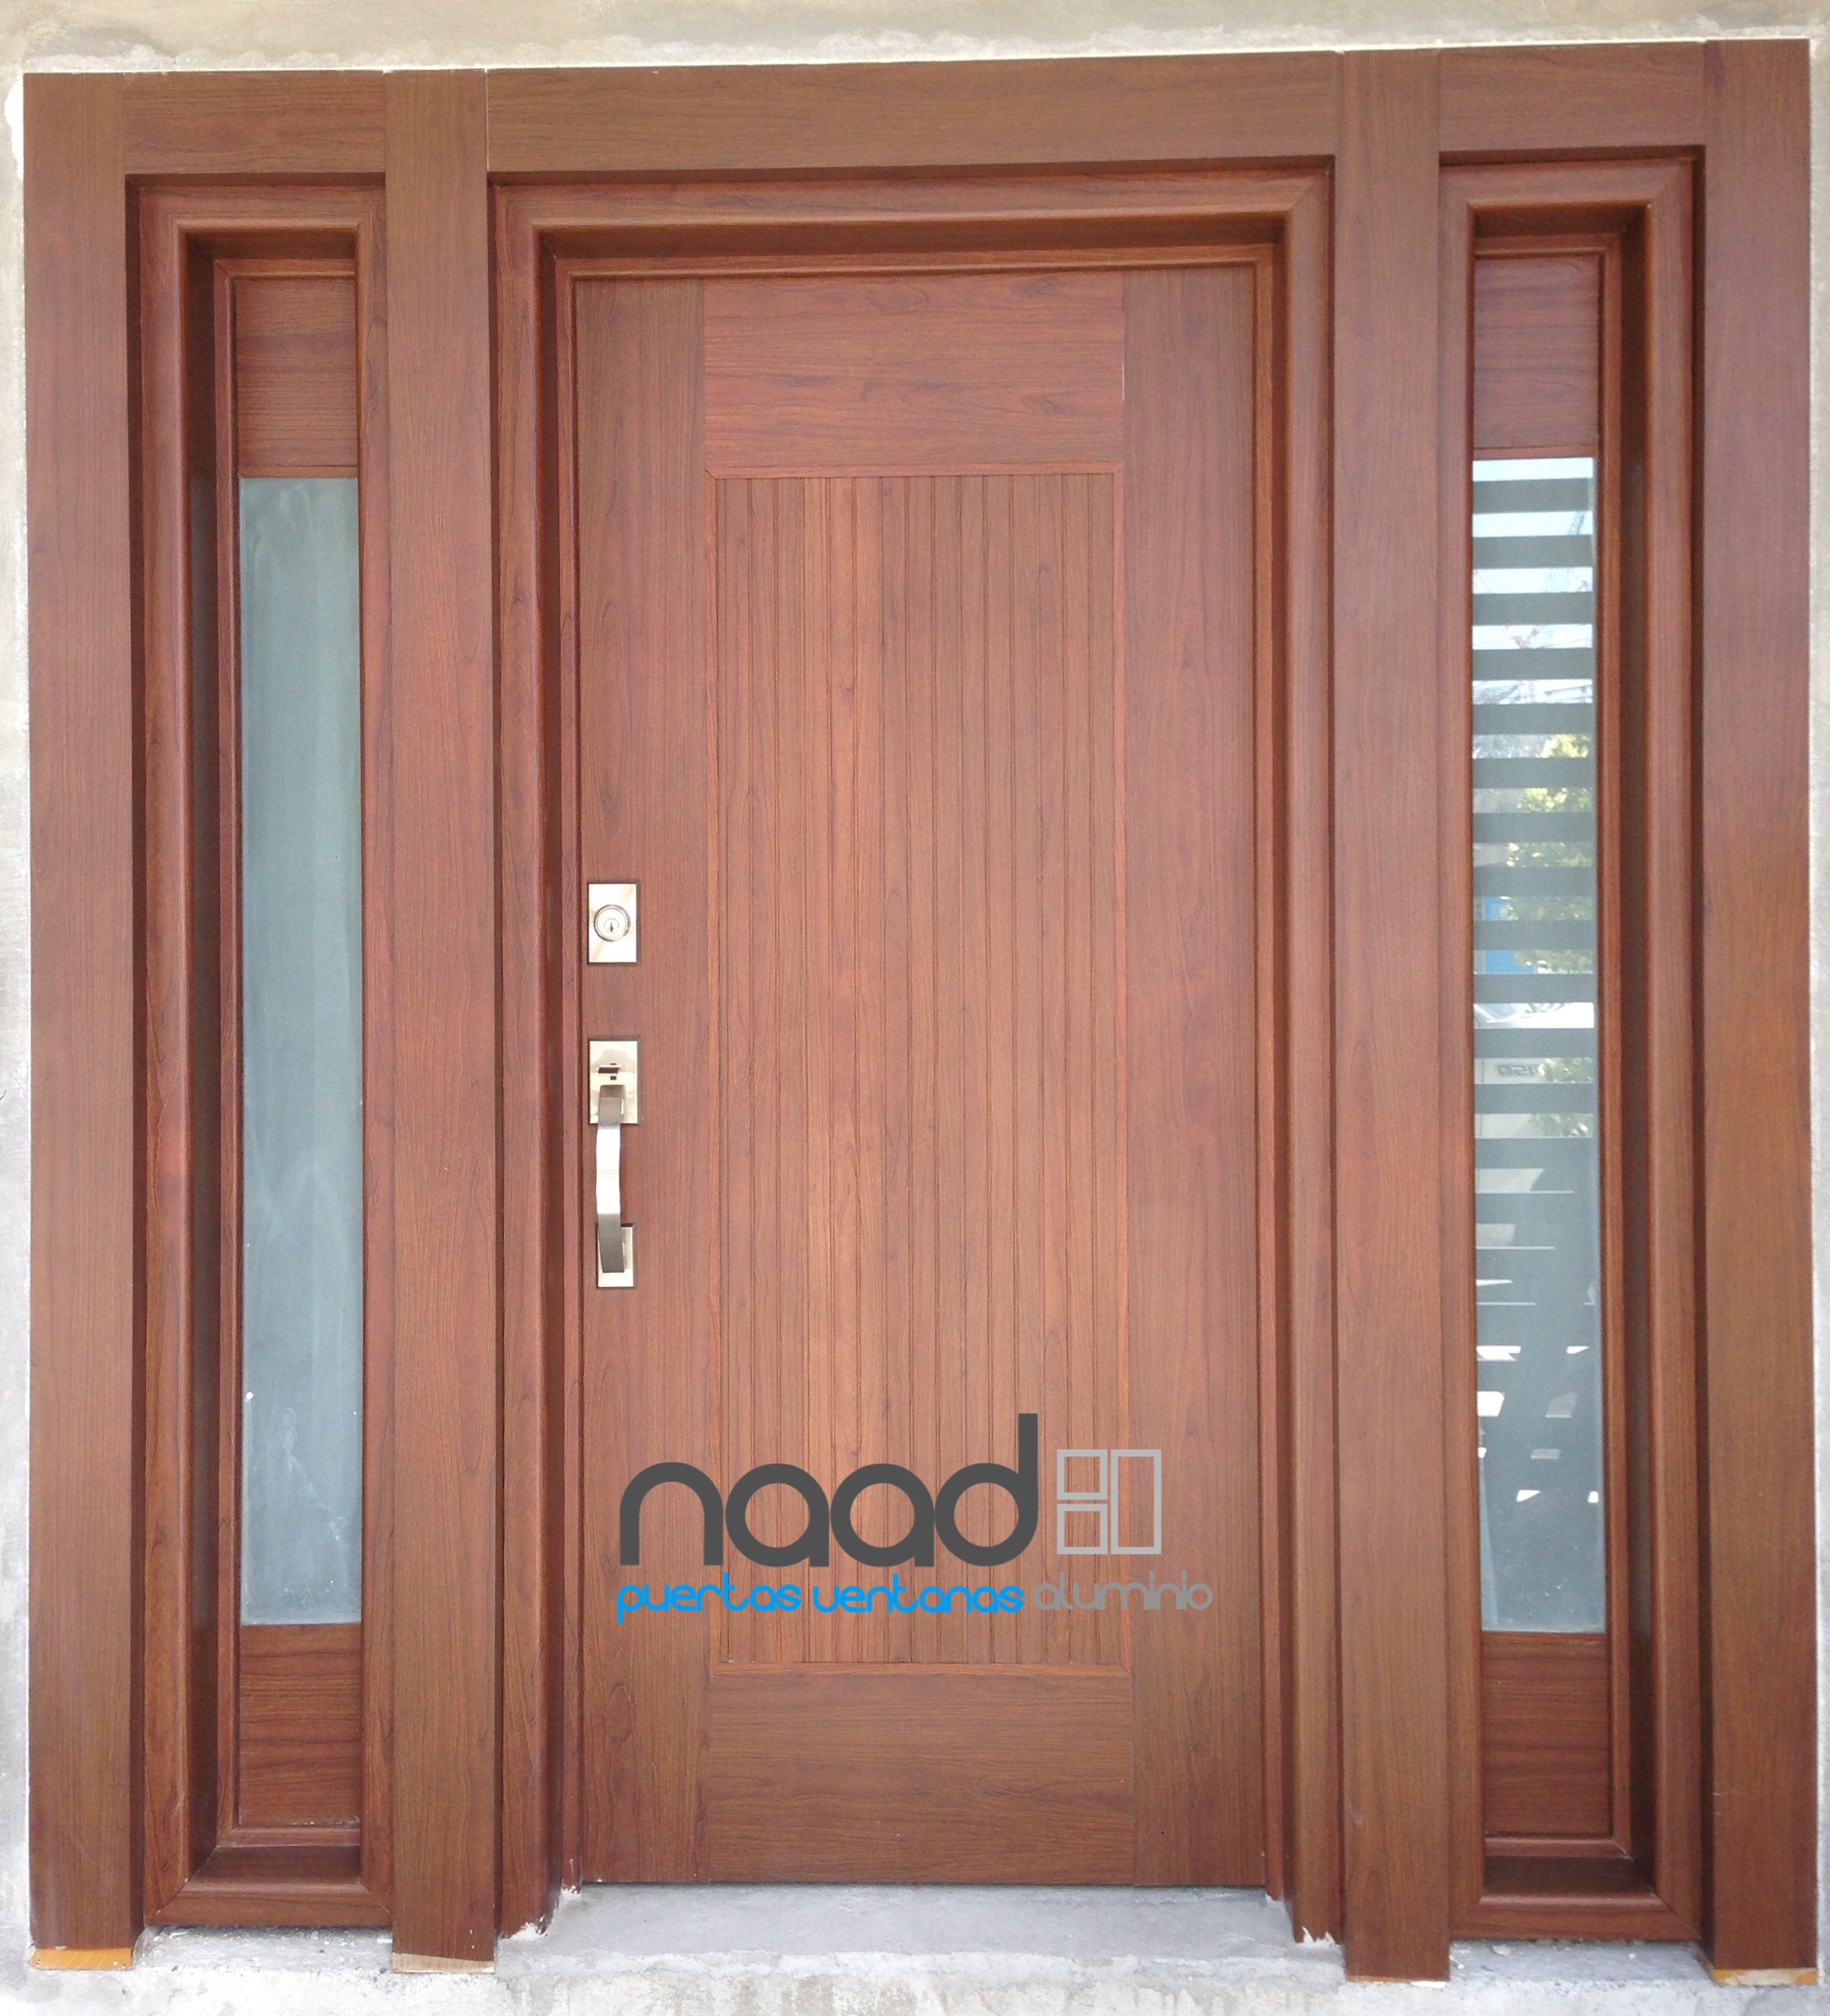 Persuasivo Tristemente Alegaciones puerta-aluminio-tono-madera – NAAD